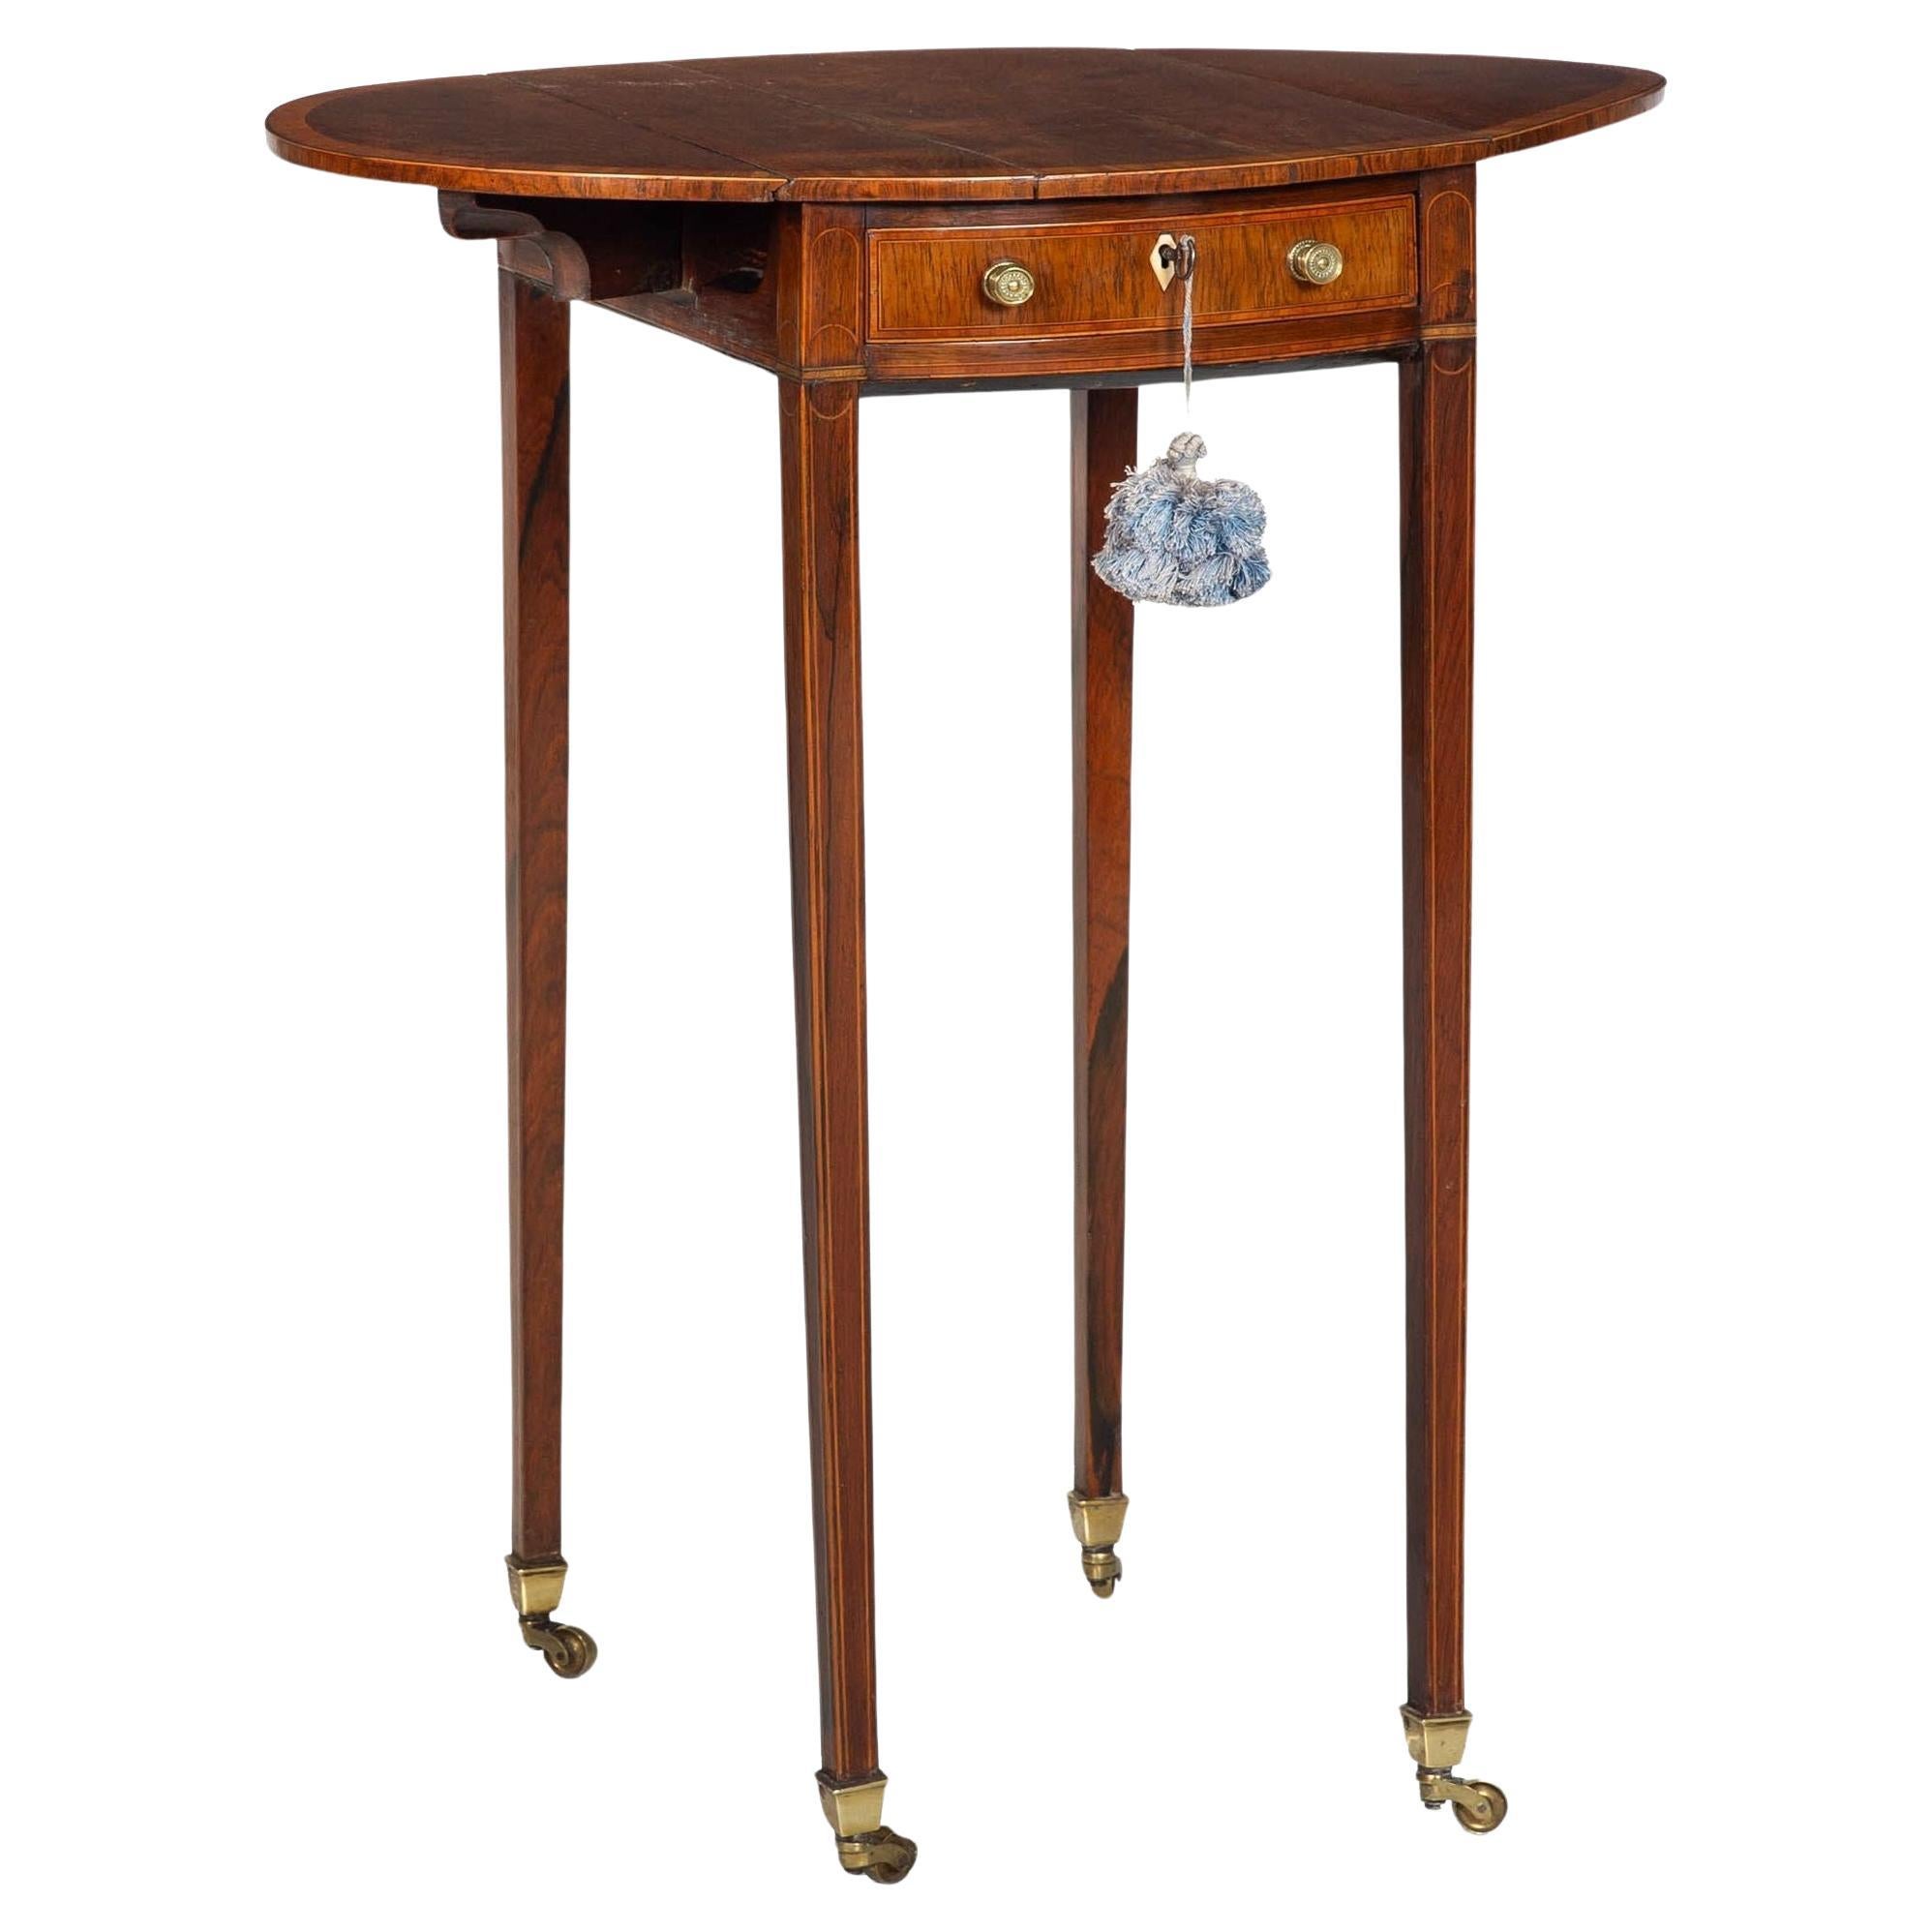 Rare Small English George III Rosewood Ovular Pembroke Side Table circa 1795